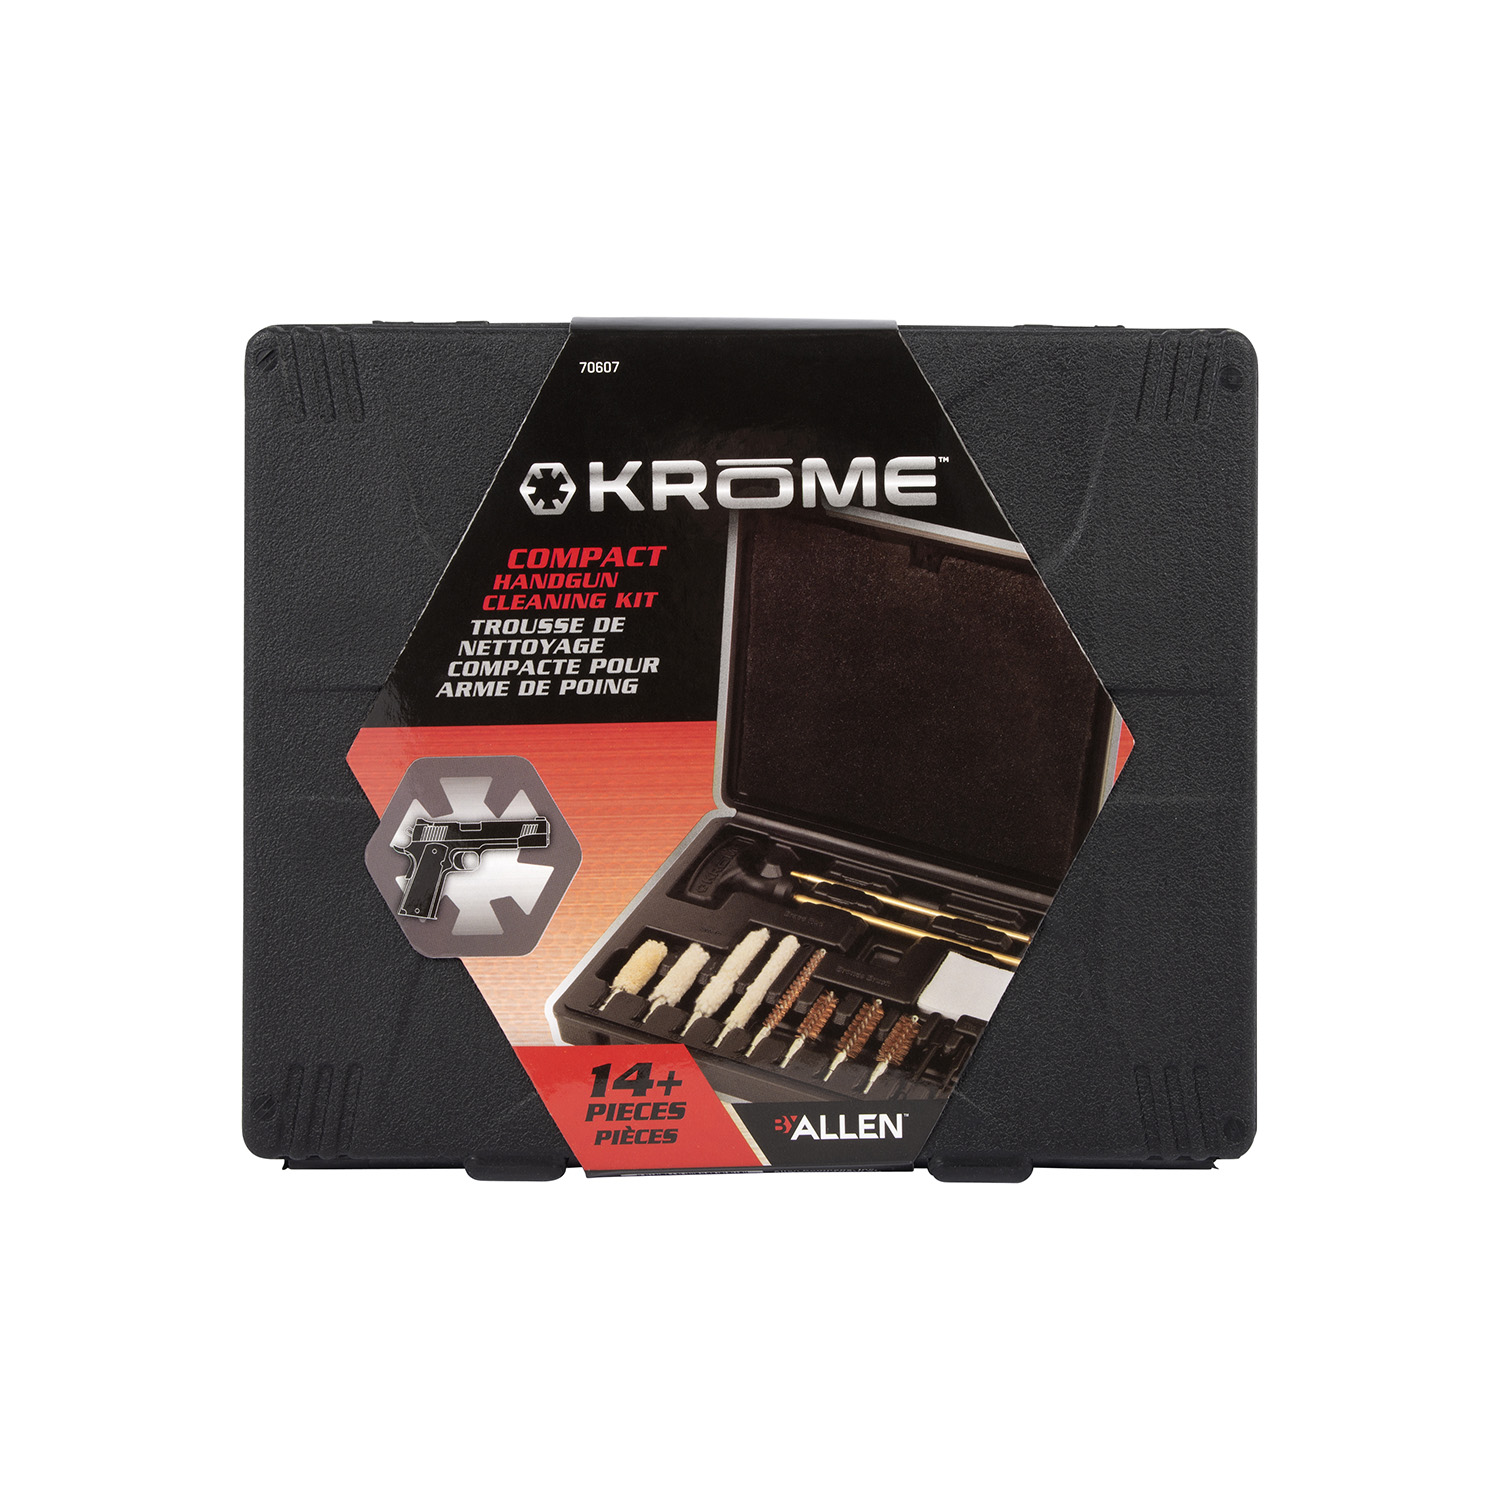 Krome 70607 Compact Handgun Cleaning Kit Multi-Caliber Handgun 14 Pieces